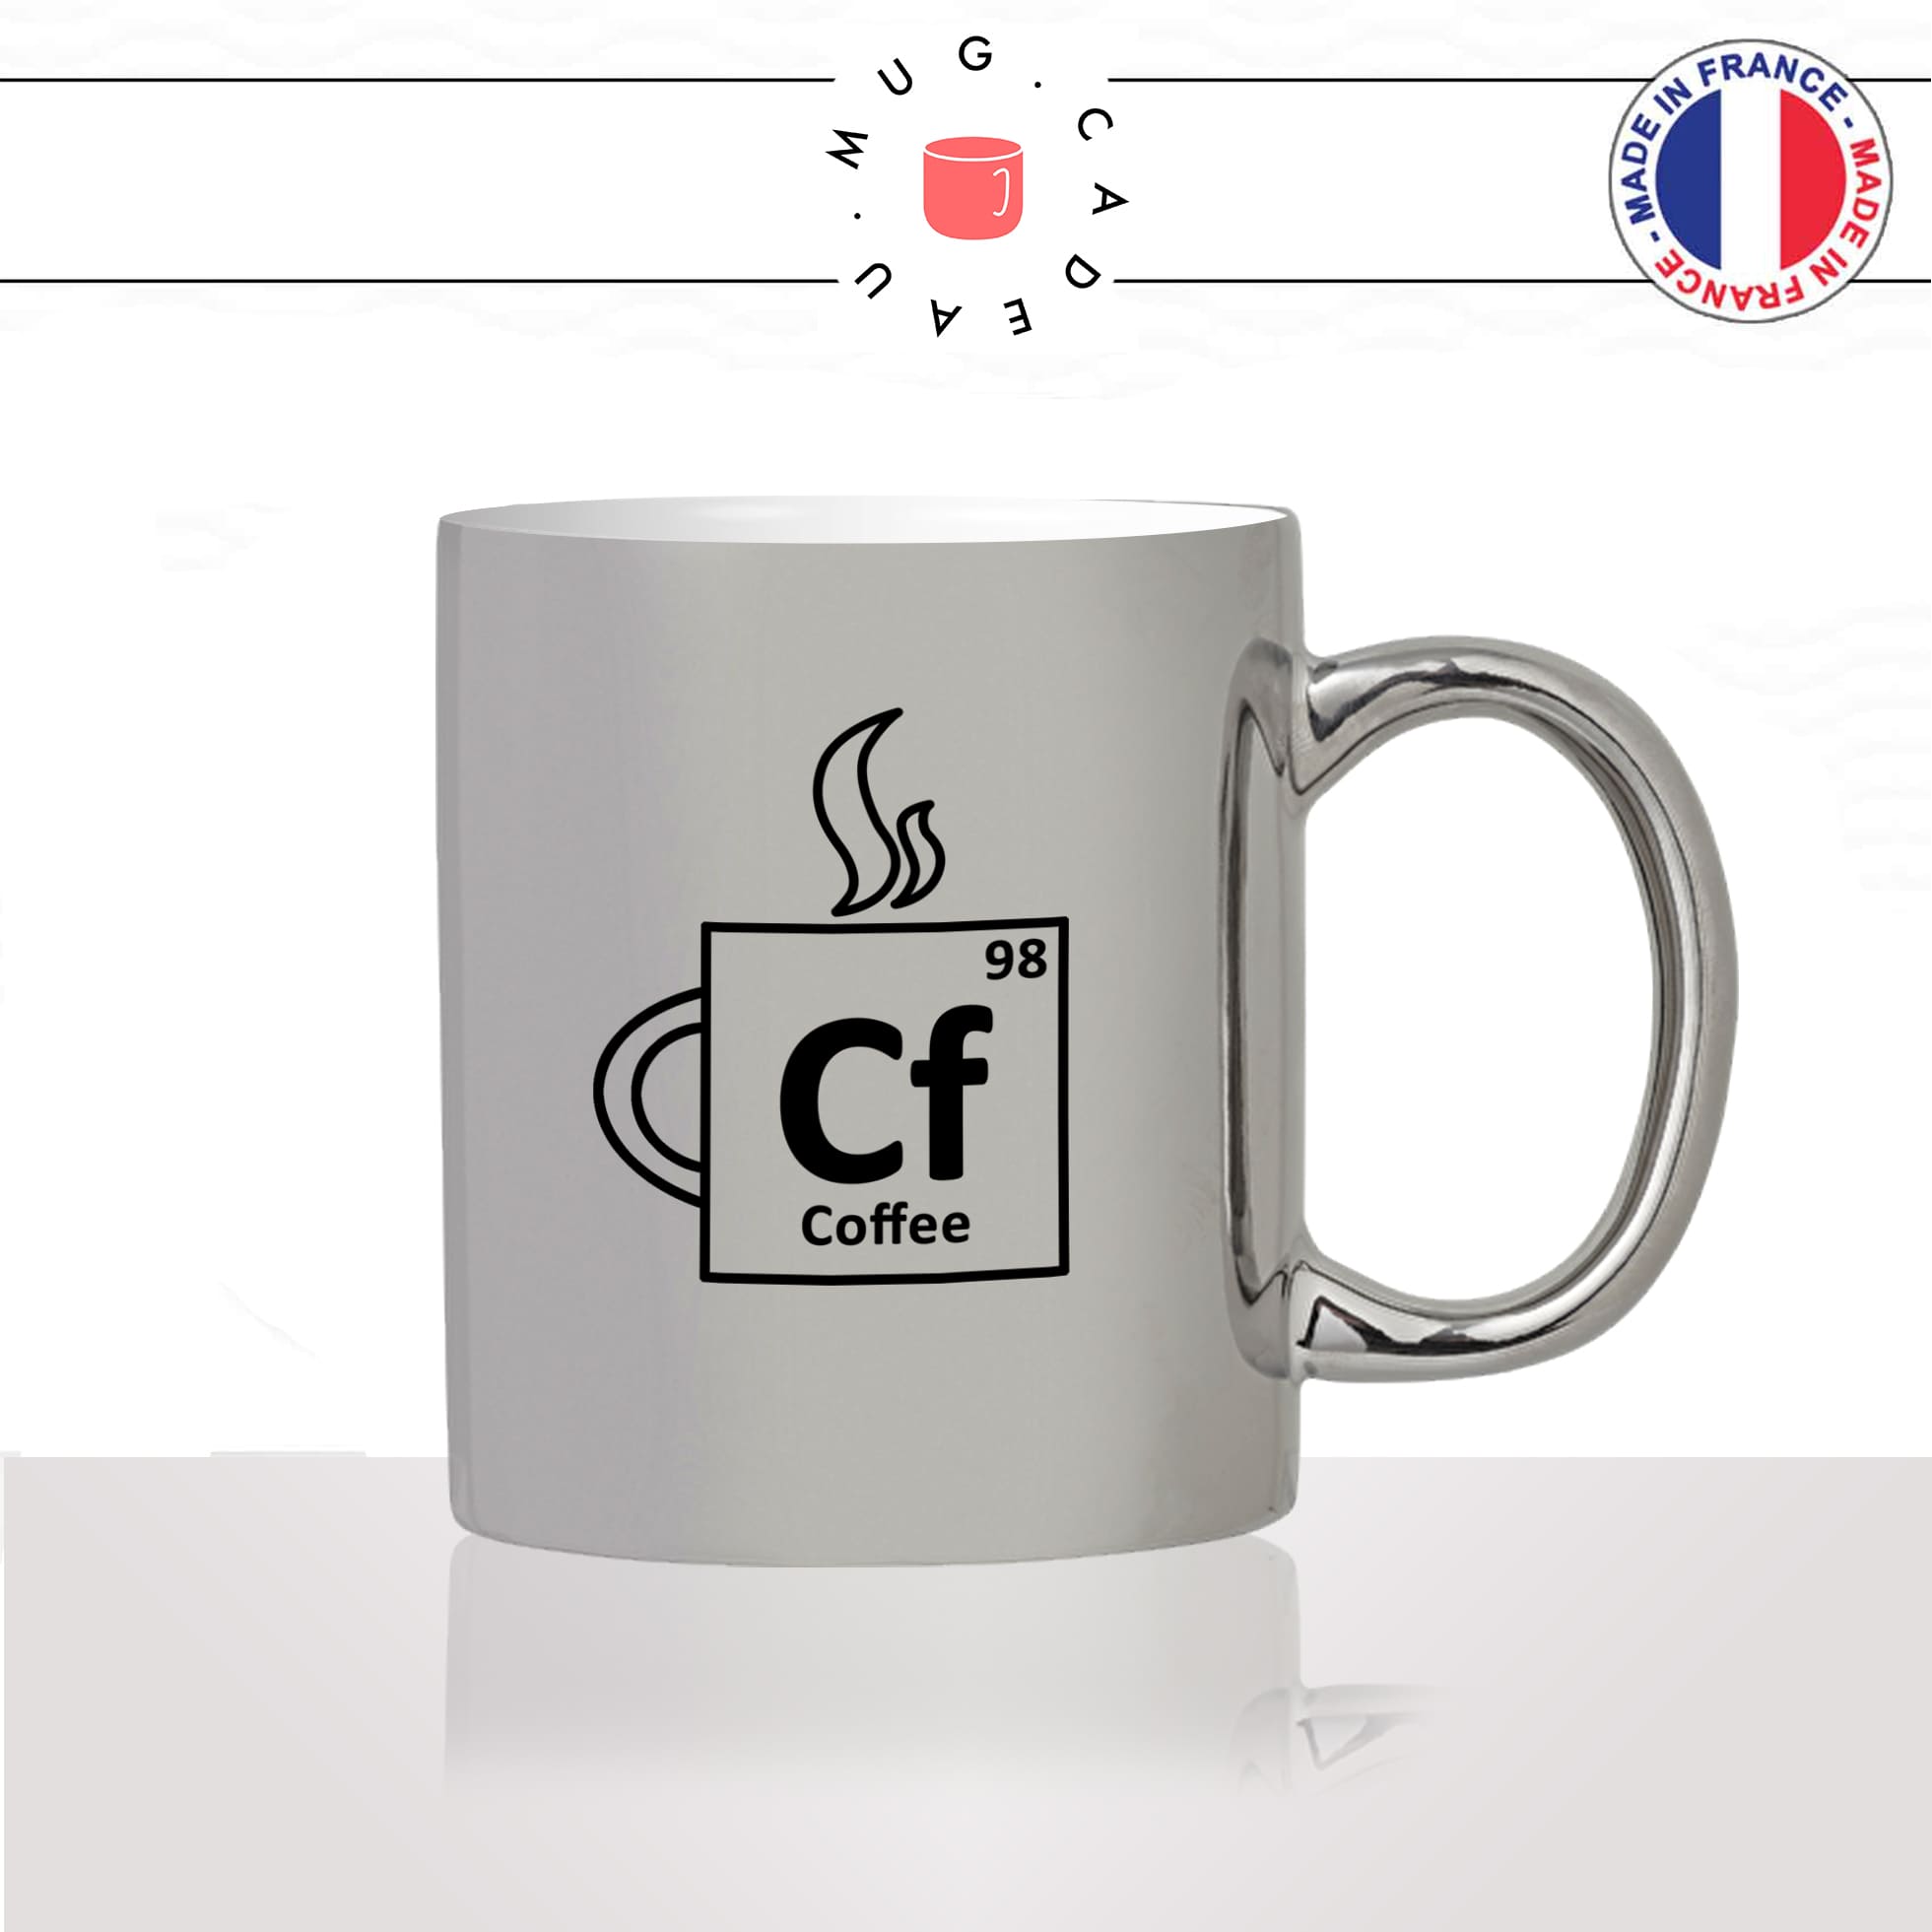 mug-tasse-argent-argenté-silver-geek-nerd-coffee-elementscience-periodique-collegue-recherche-matin-pause-idée-cadeau-fun-cool-café-thé2